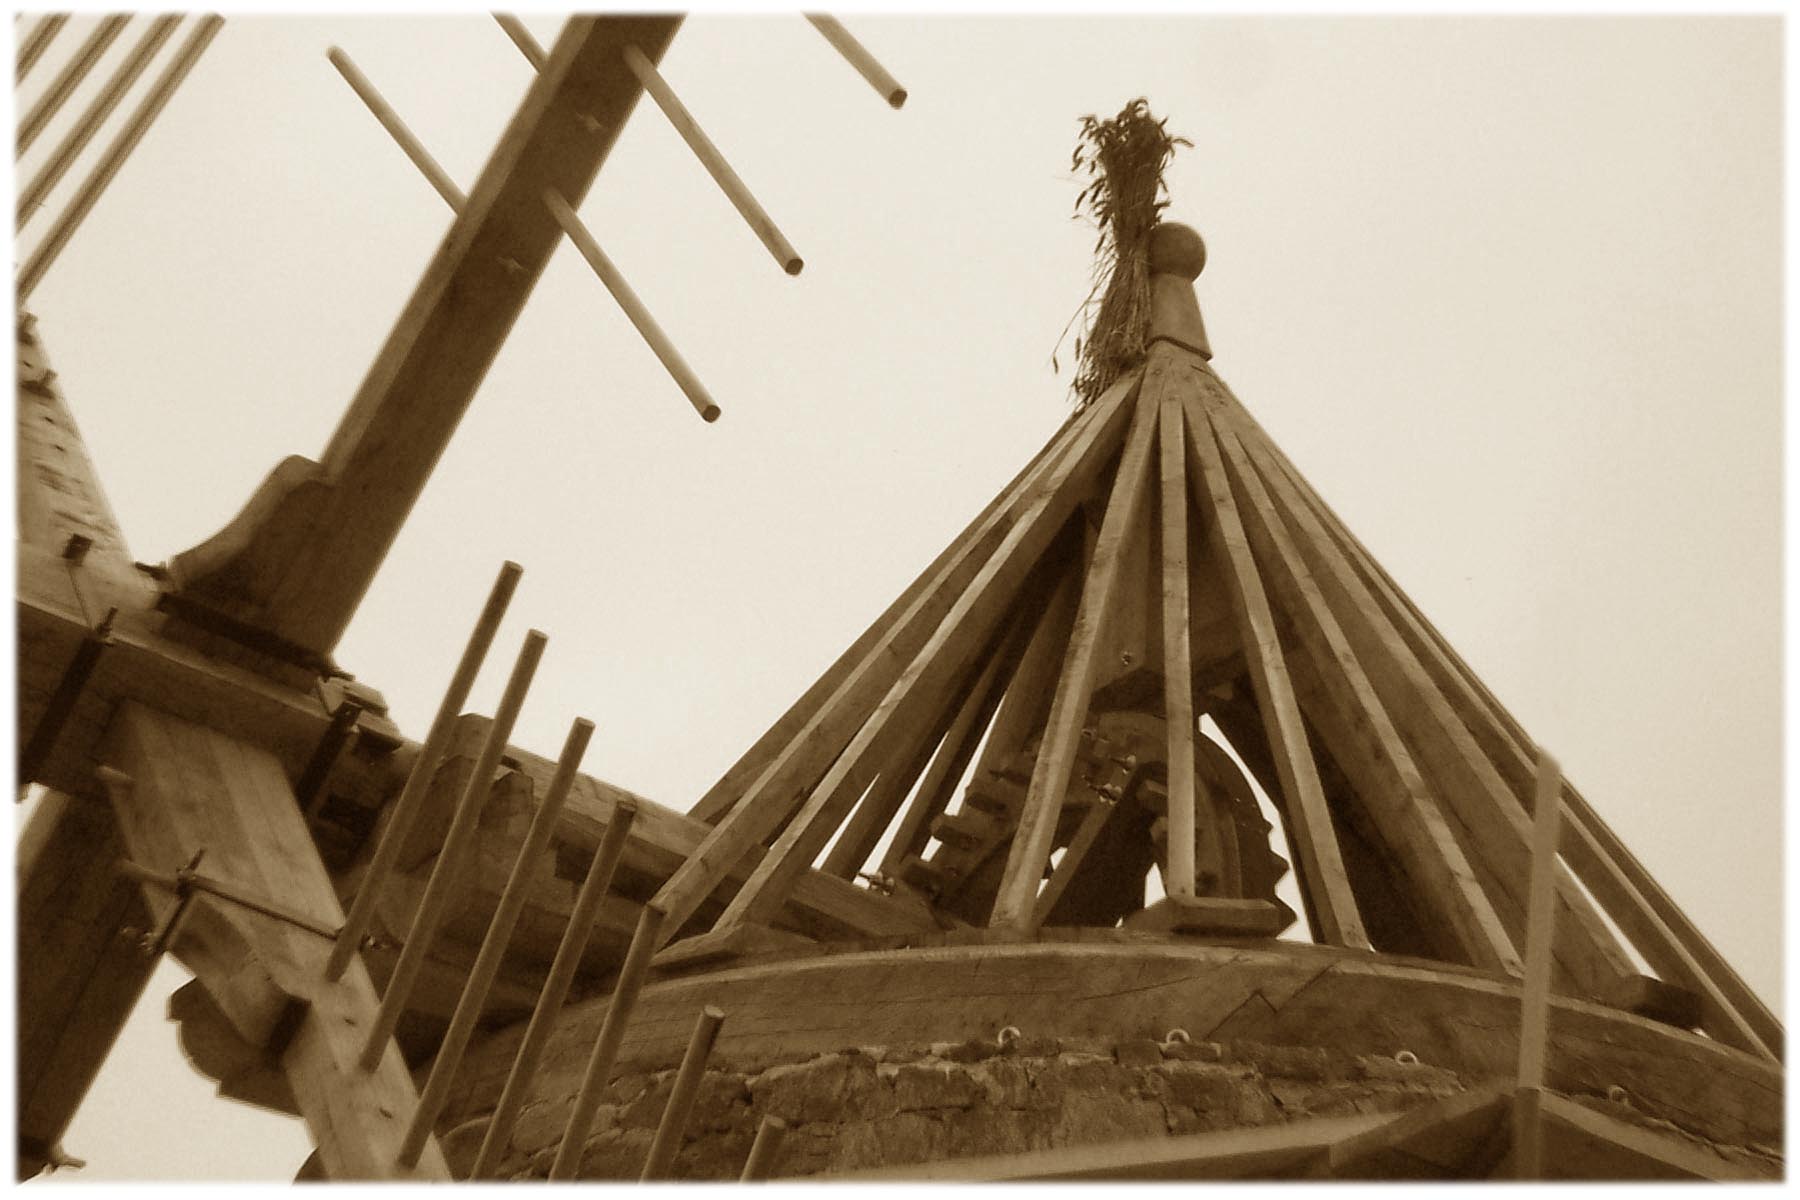 Photo Corynn - Charpente d'un moulin  vent au Cap Sizun